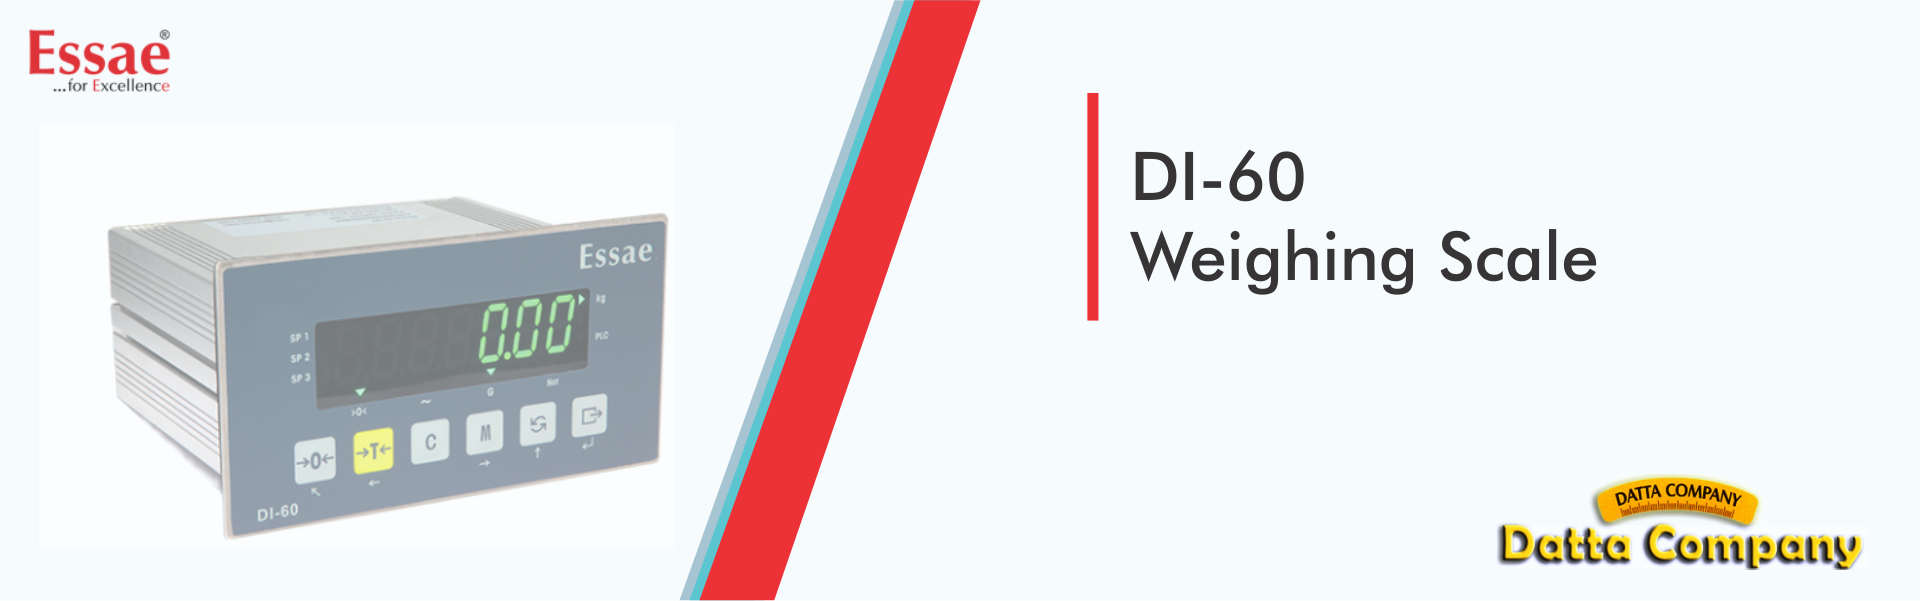 DI-60 Weighing Scale